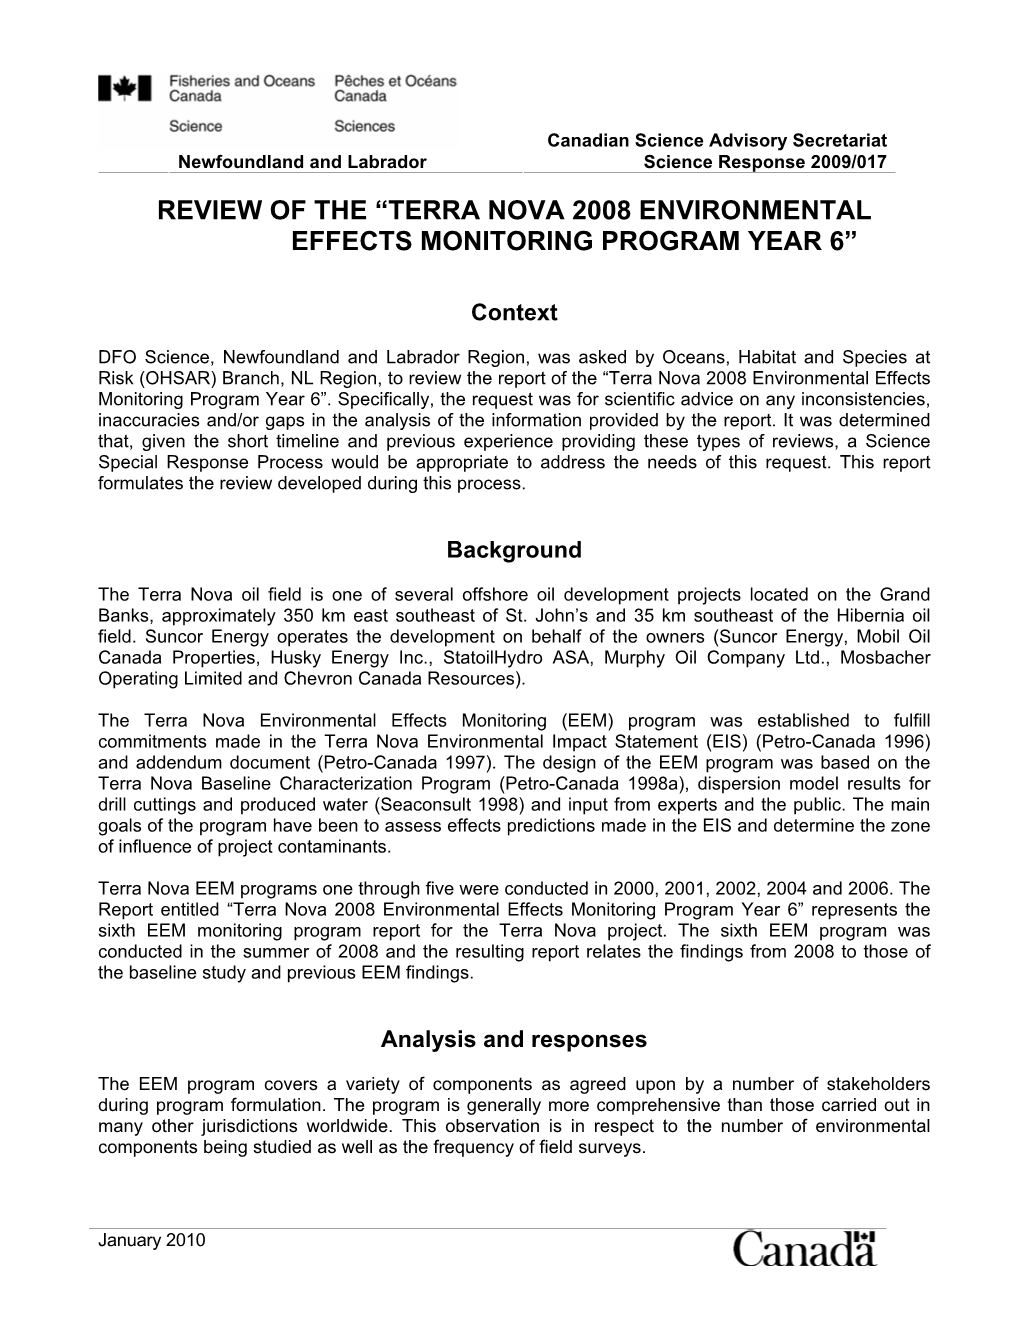 Terra Nova 2008 Environmental Effects Monitoring Program Year 6”